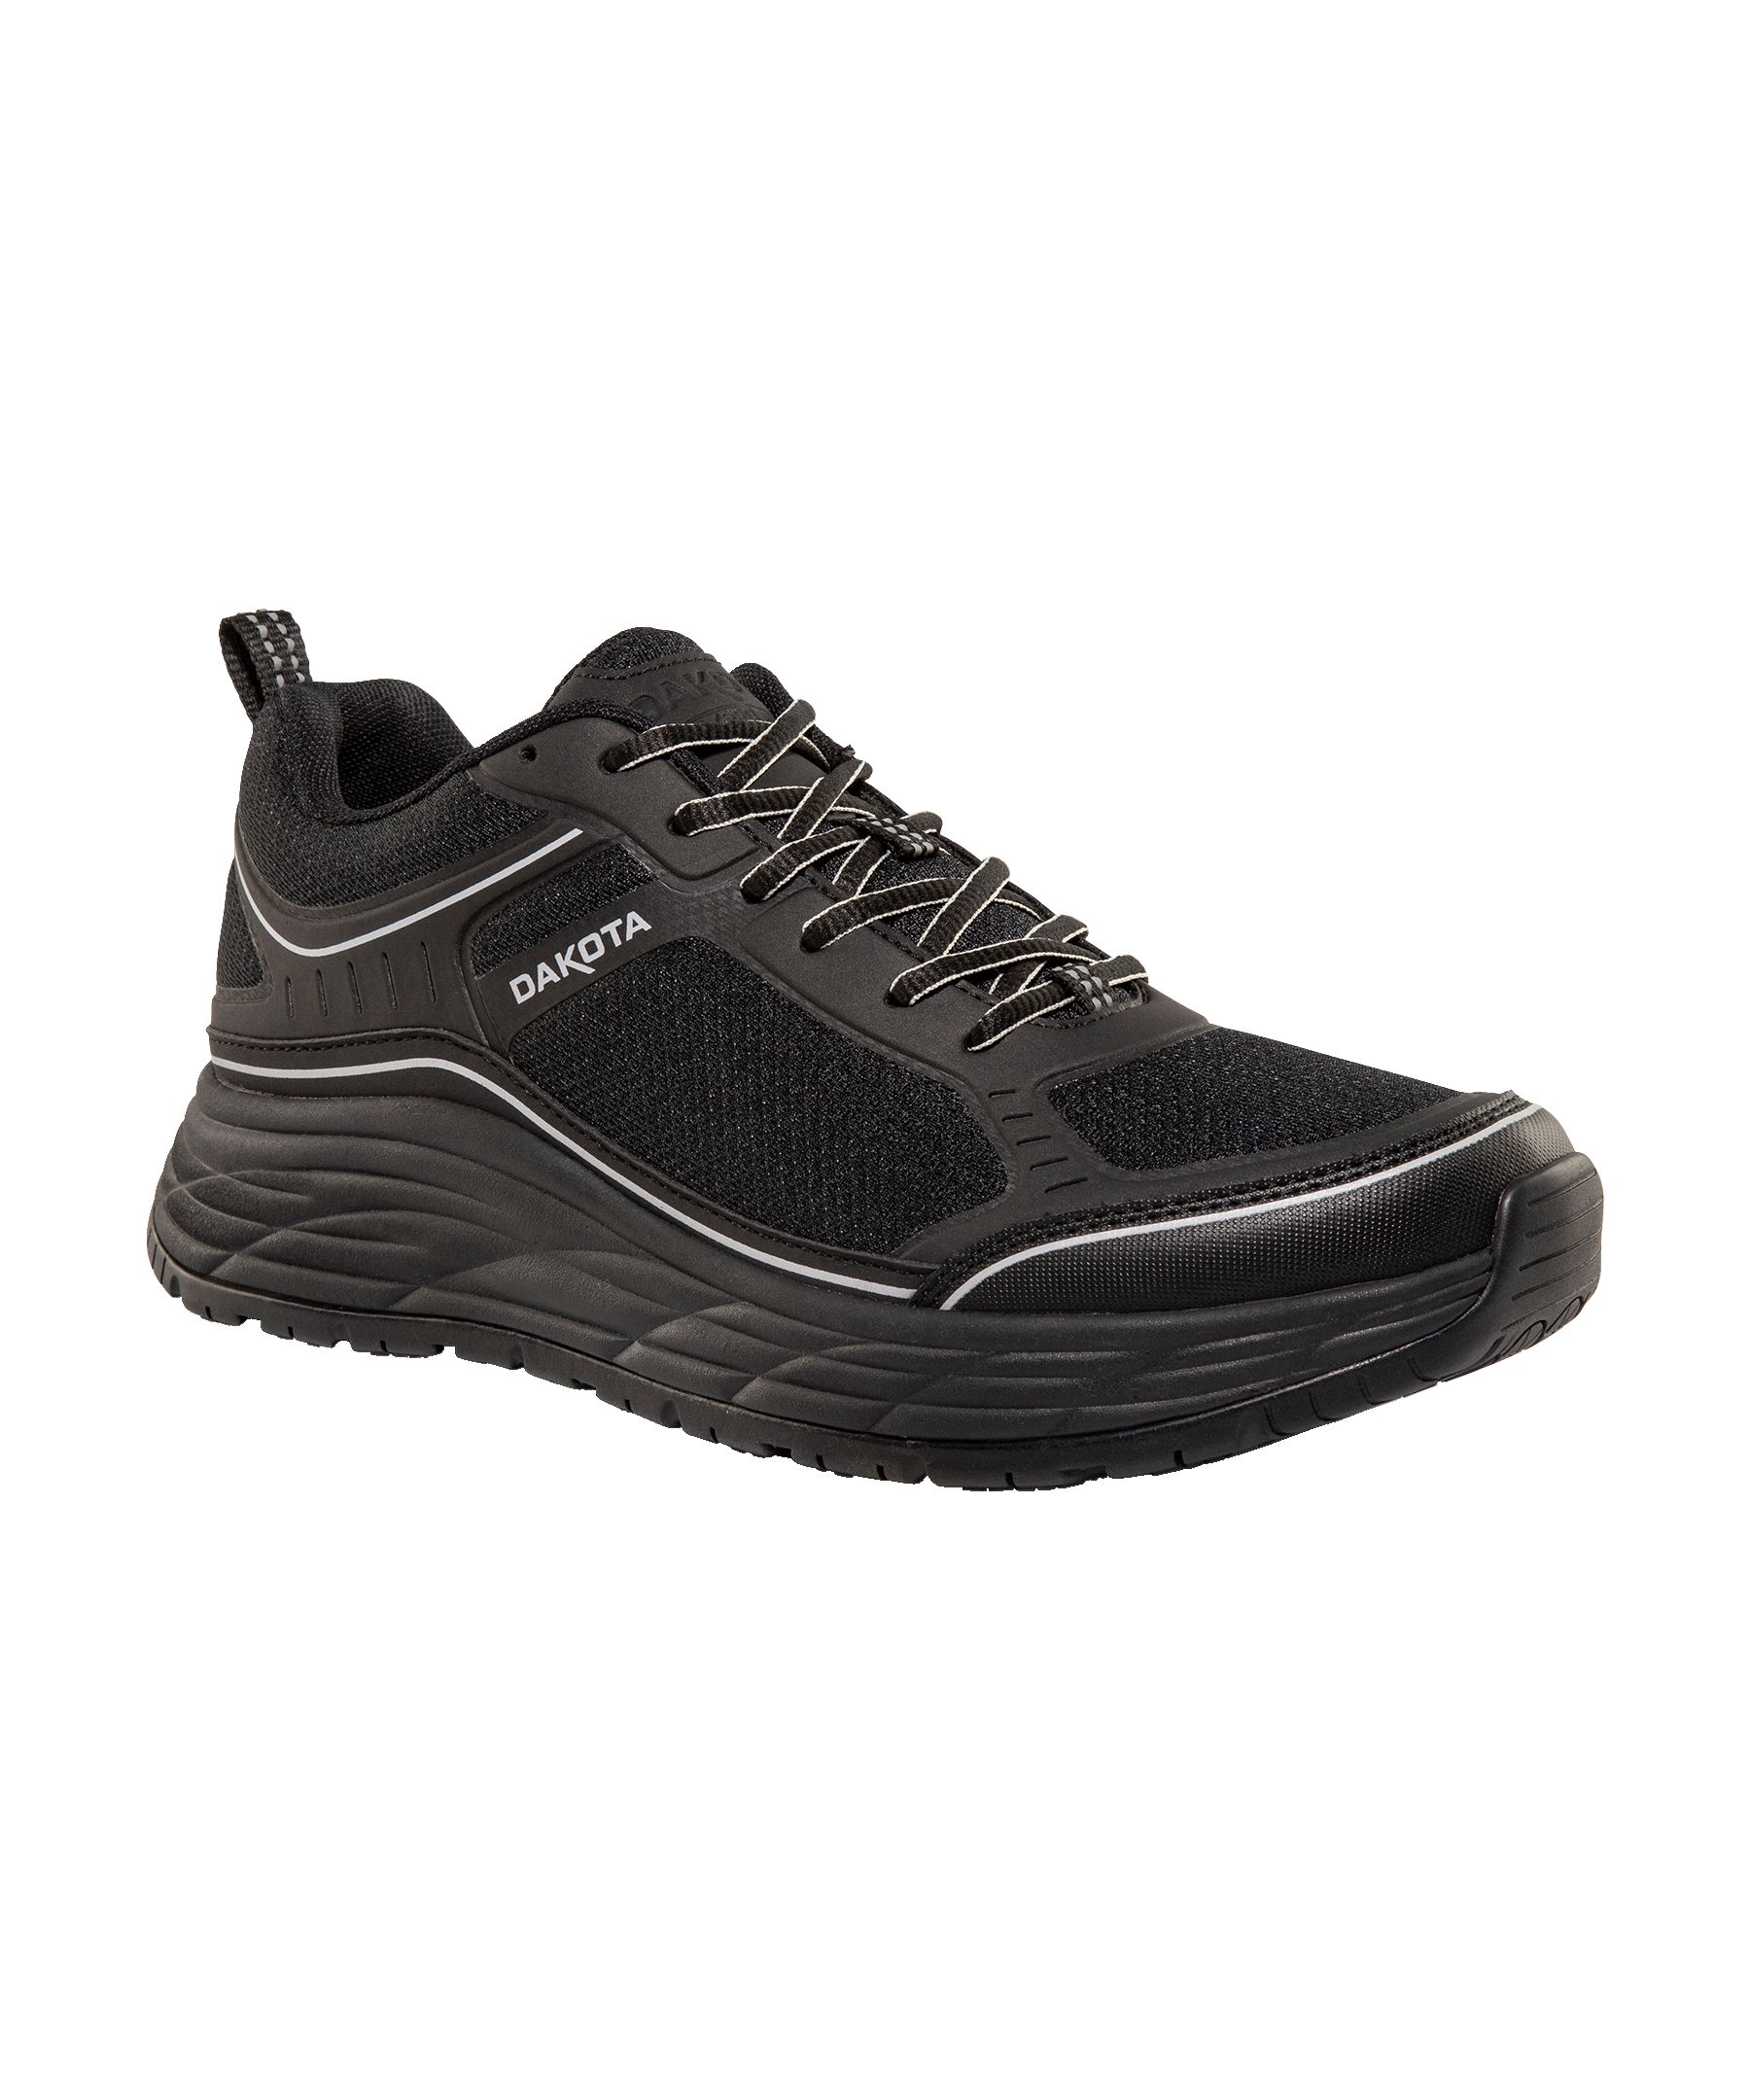 Dakota WorkPro Series Men's Non-Safety Anti-Slip Slip On Shoes